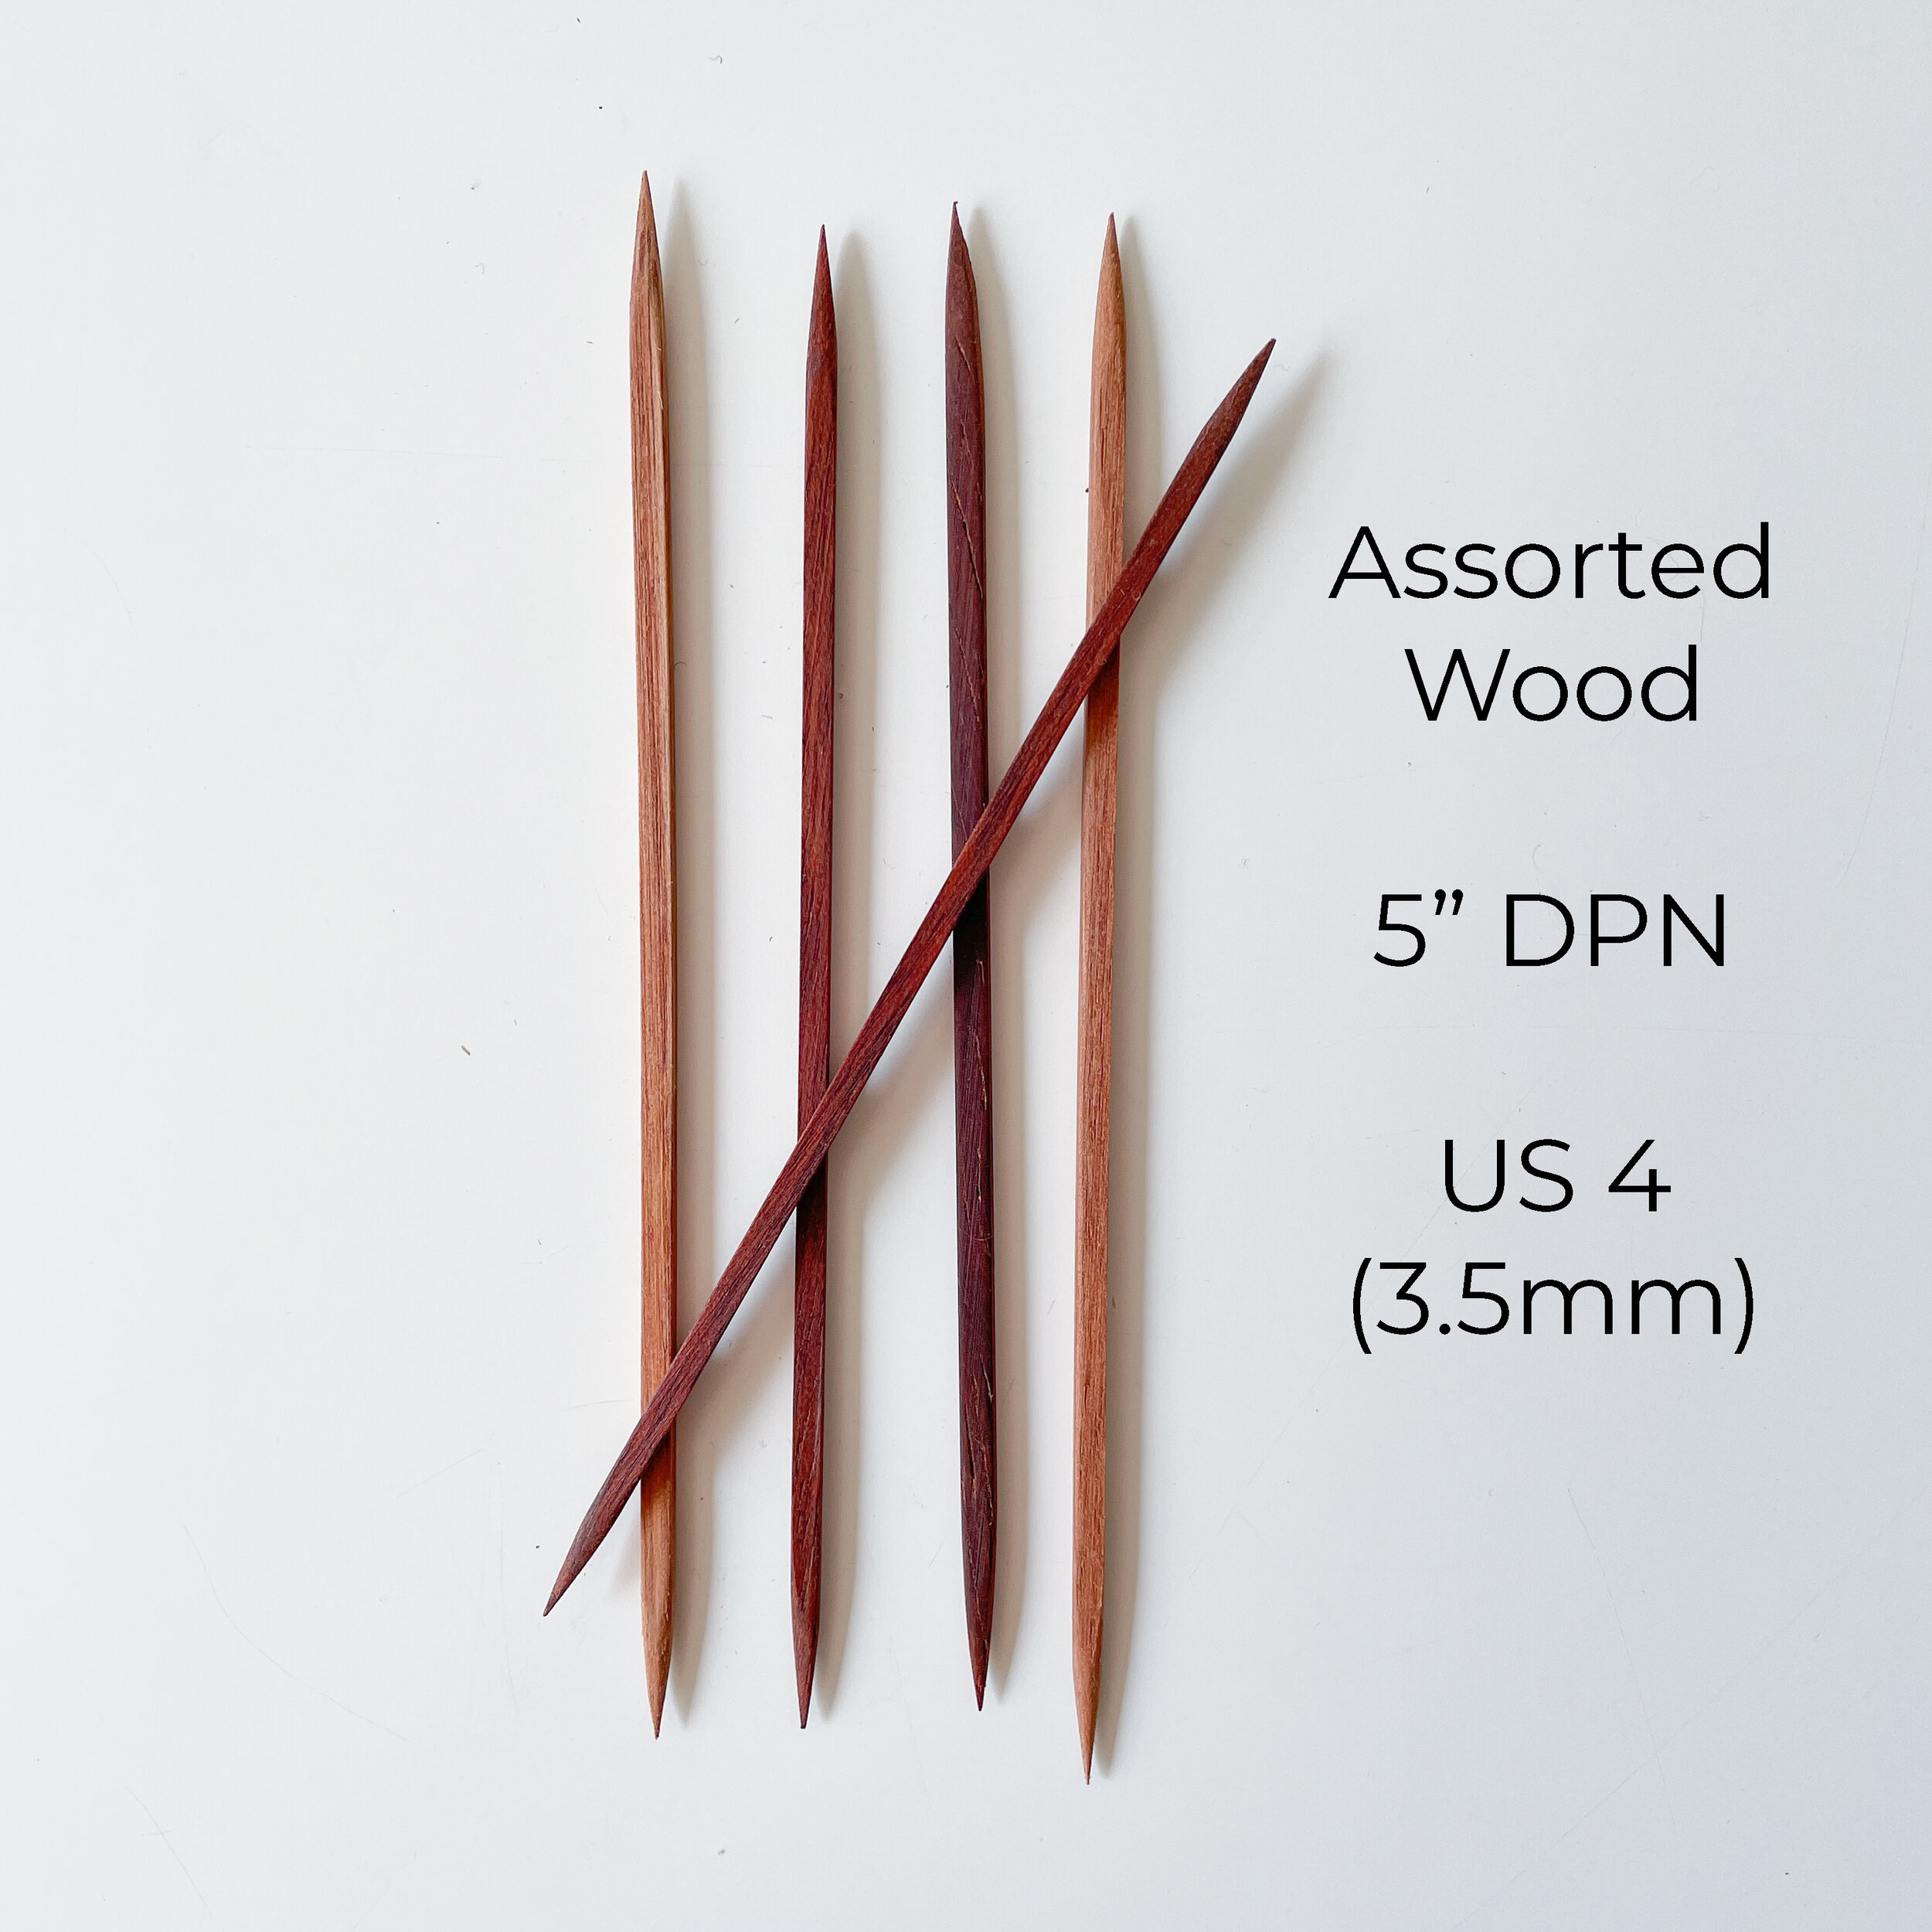 Knitter's Pride Bamboo Single Point Needles 14: Laurel Hill Exotic Wood  Fiber Arts Tools